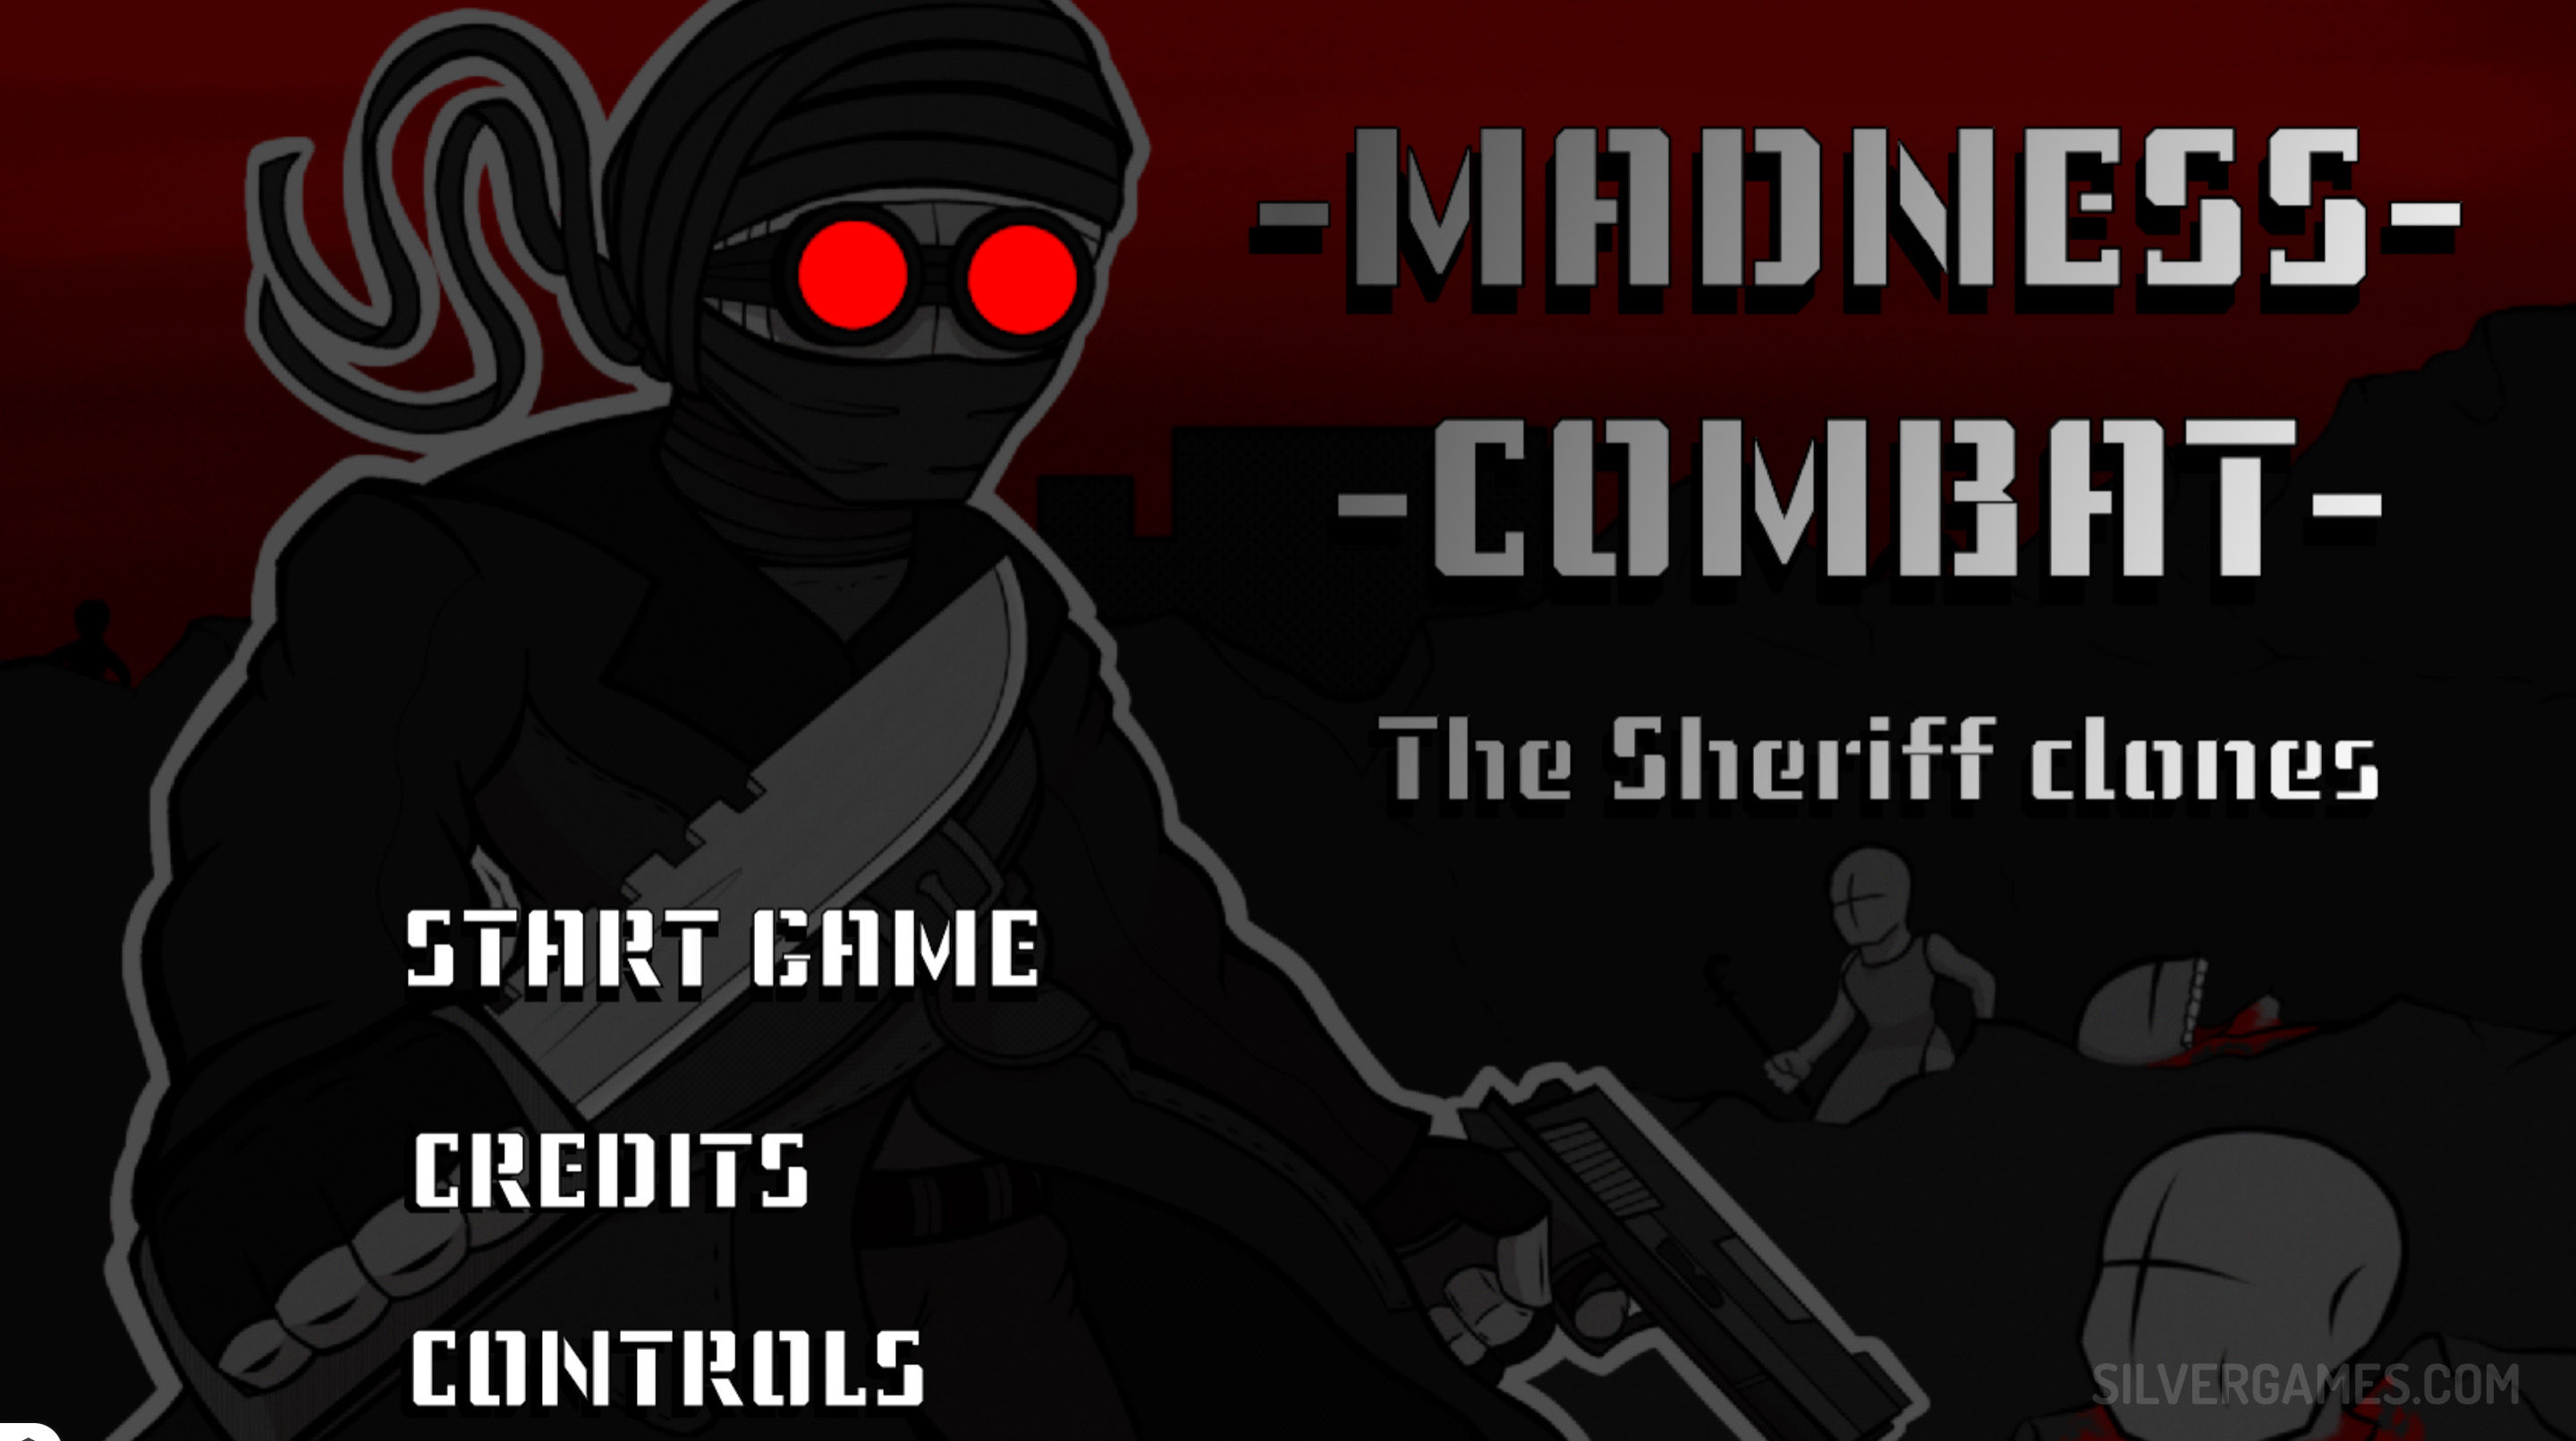 MADNESS COMBAT - THE SHERIFF CLONES